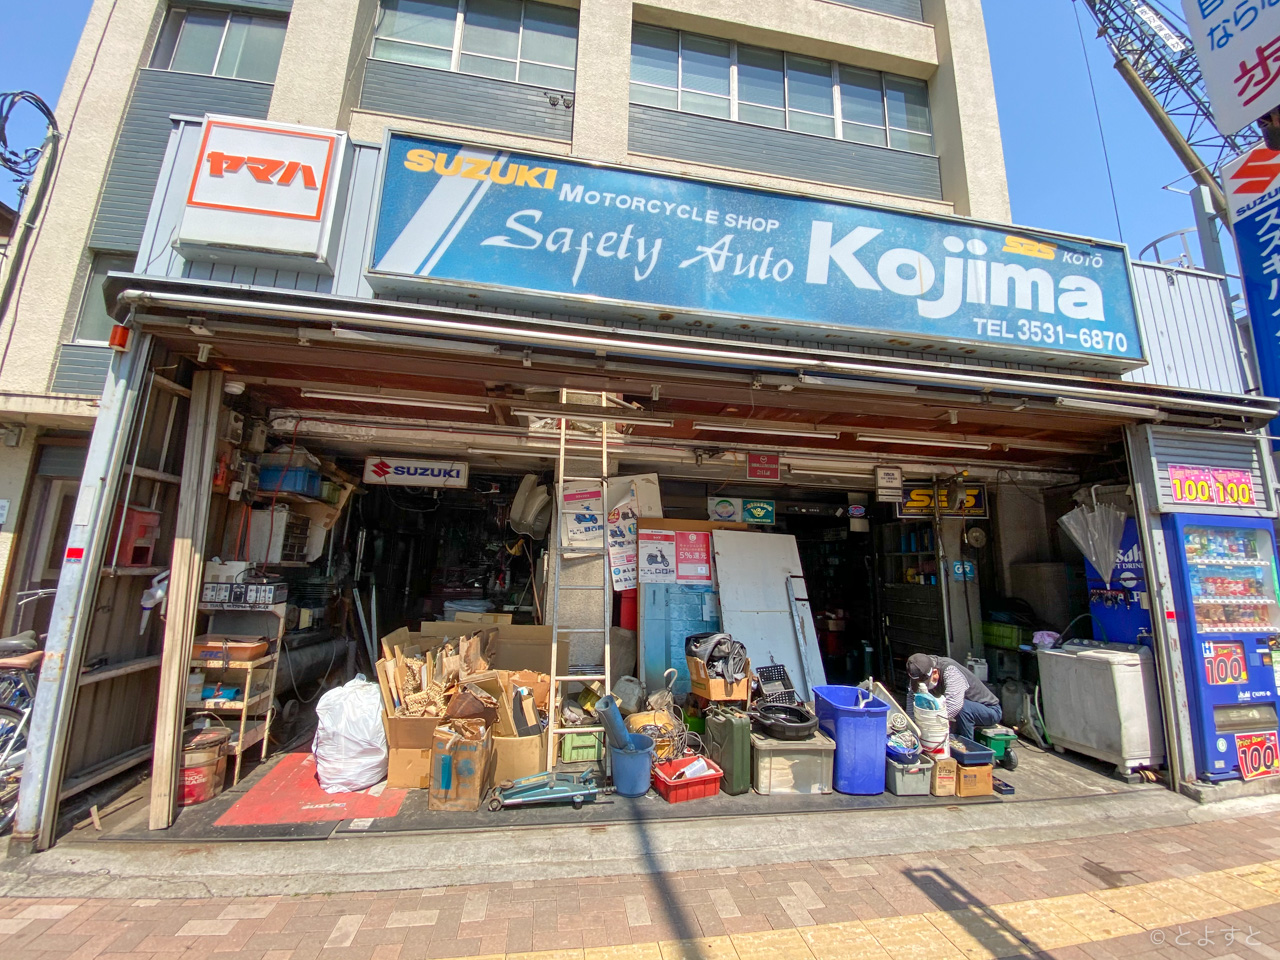 SBS国内1号店、豊洲のバイク修理店「セフティオートコジマ」が閉店。廃車寸前のバイクも直す職人の店